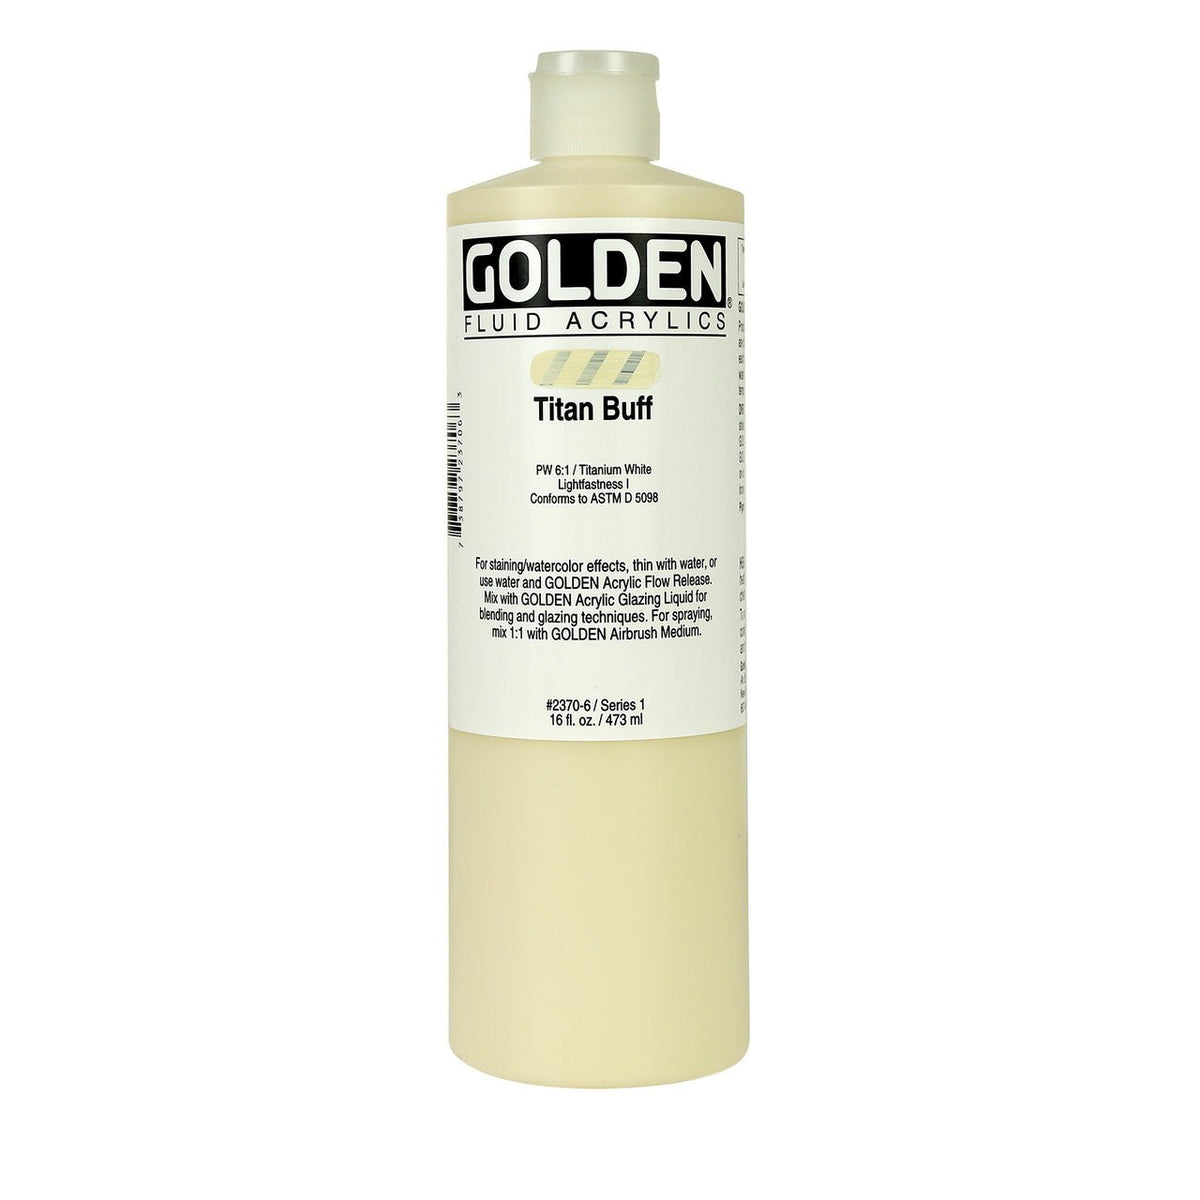 Golden Fluid Acrylic Titan Buff 16 oz - merriartist.com